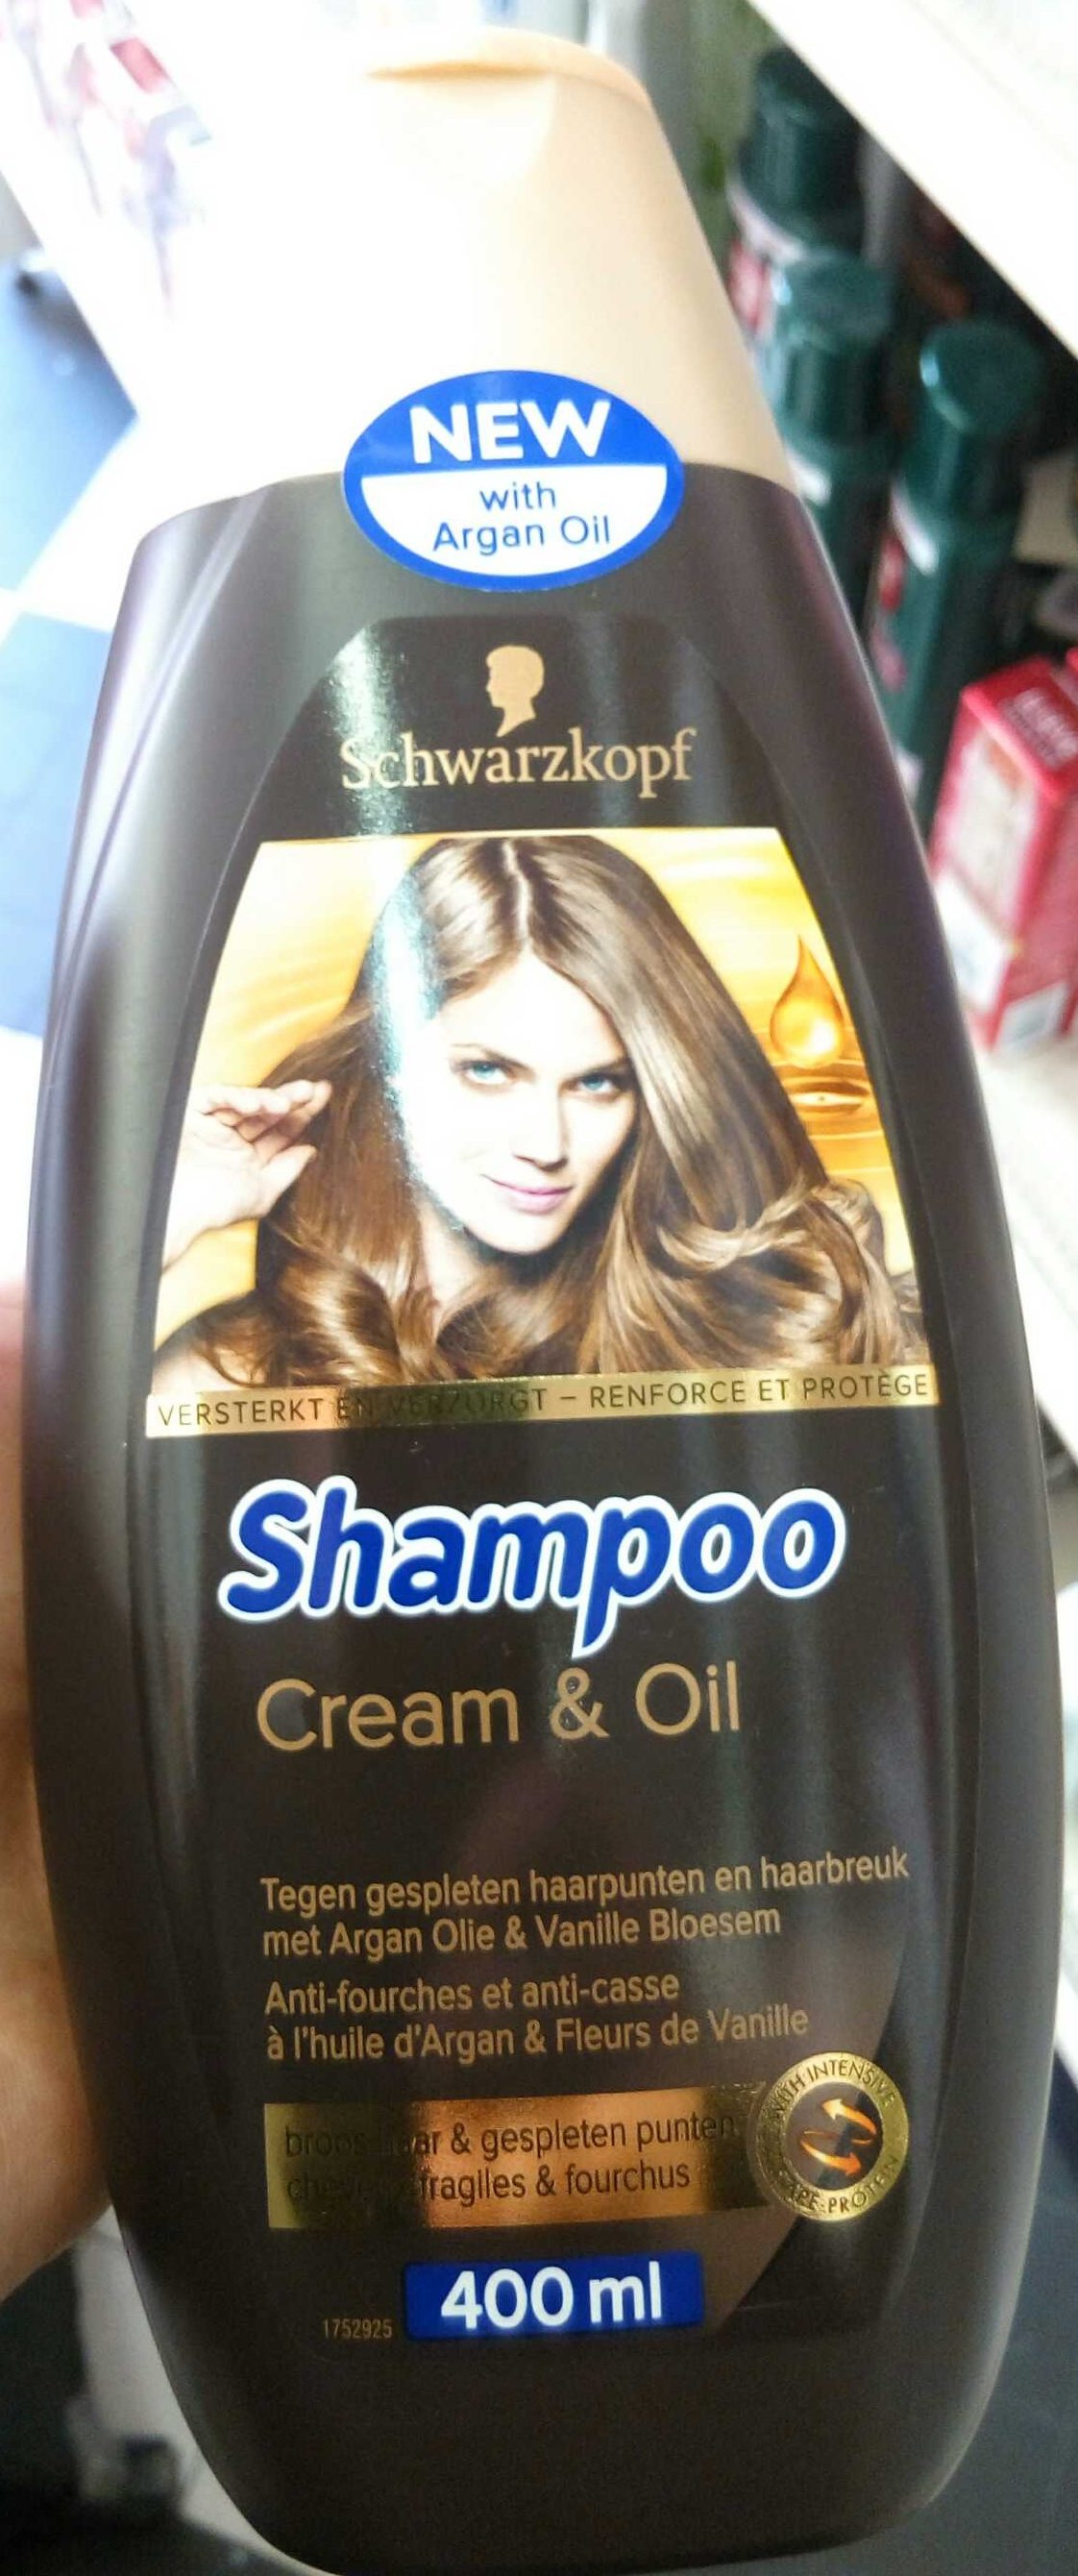 Shampoo Cream & Oil - Product - fr